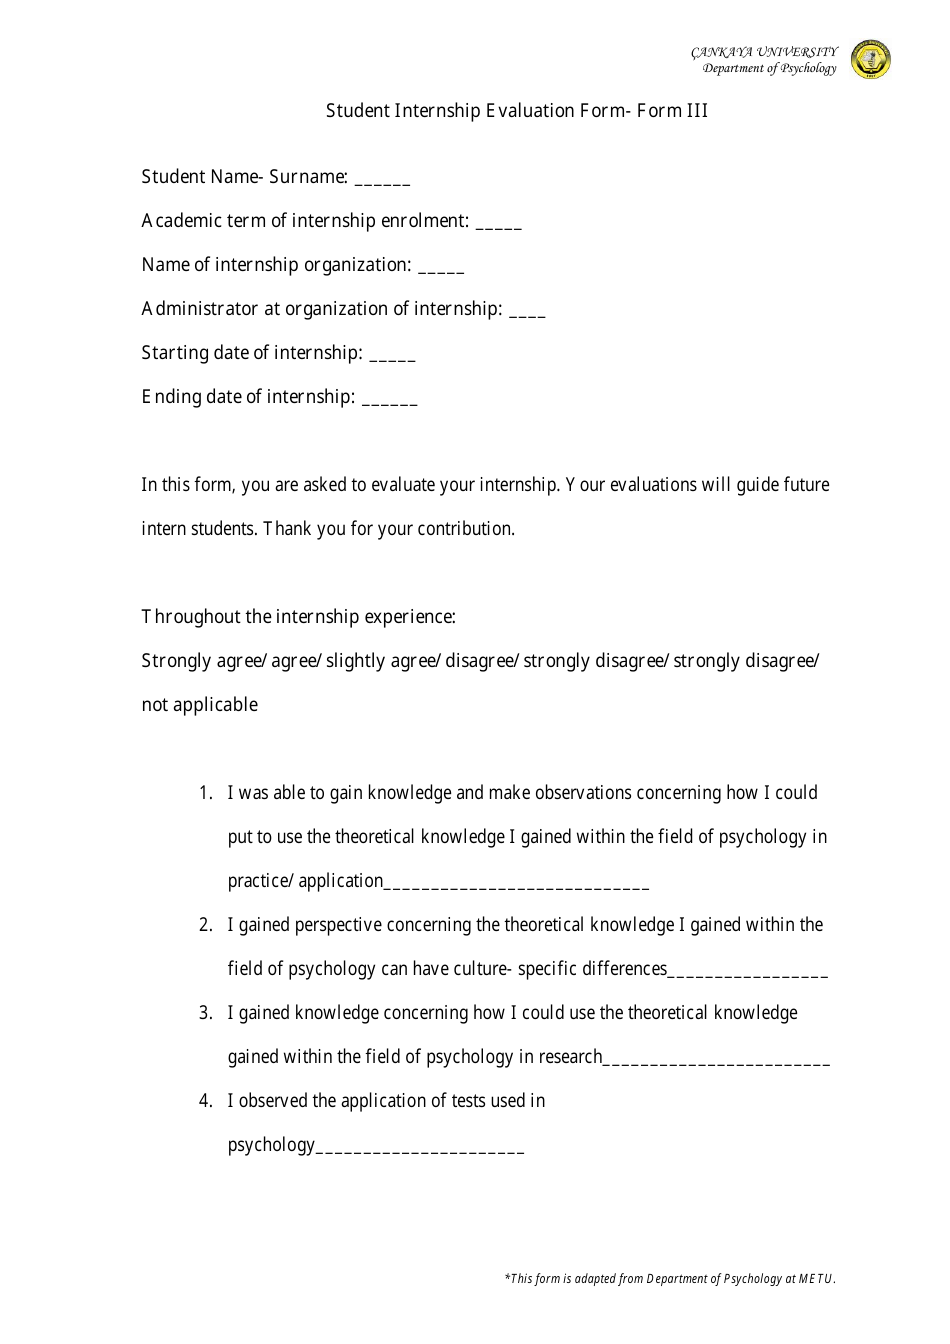 Student Internship Evaluation Form - Cankaya University, Page 1